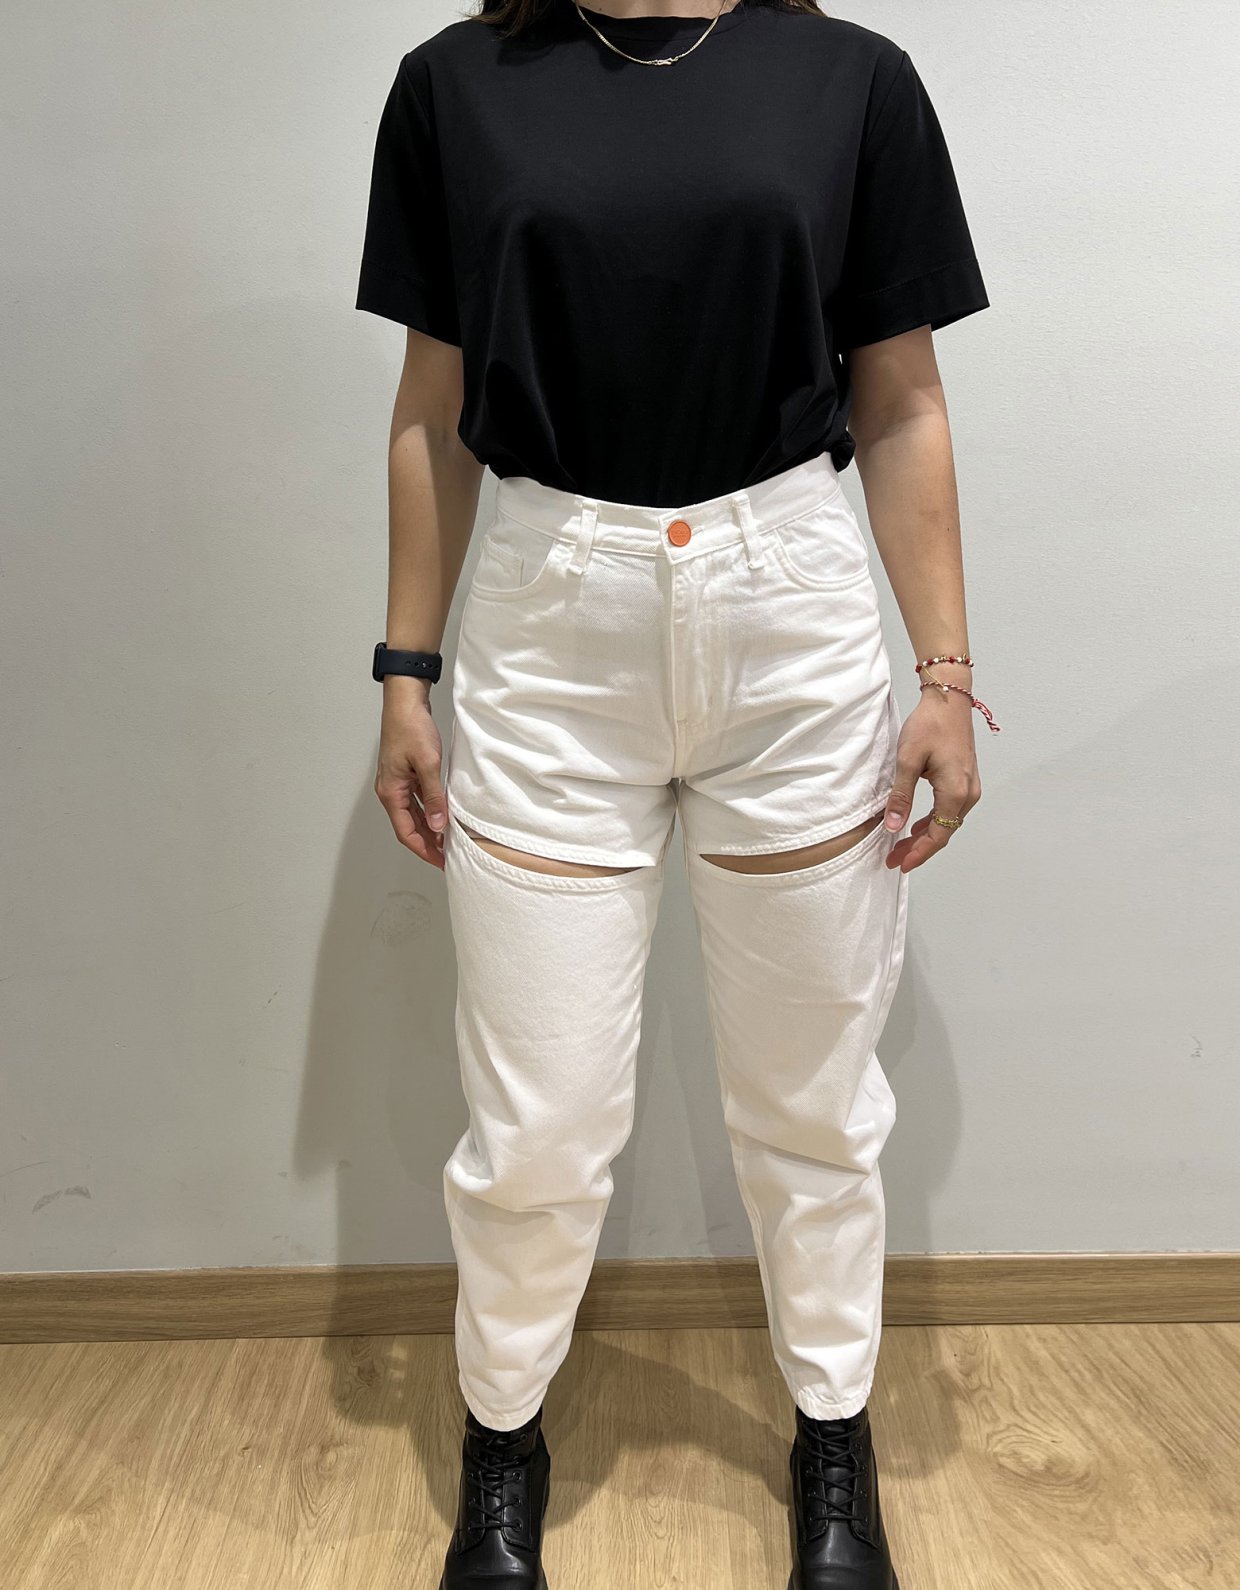 Sac & CO Jeans Rosalia slim fit white denim pants